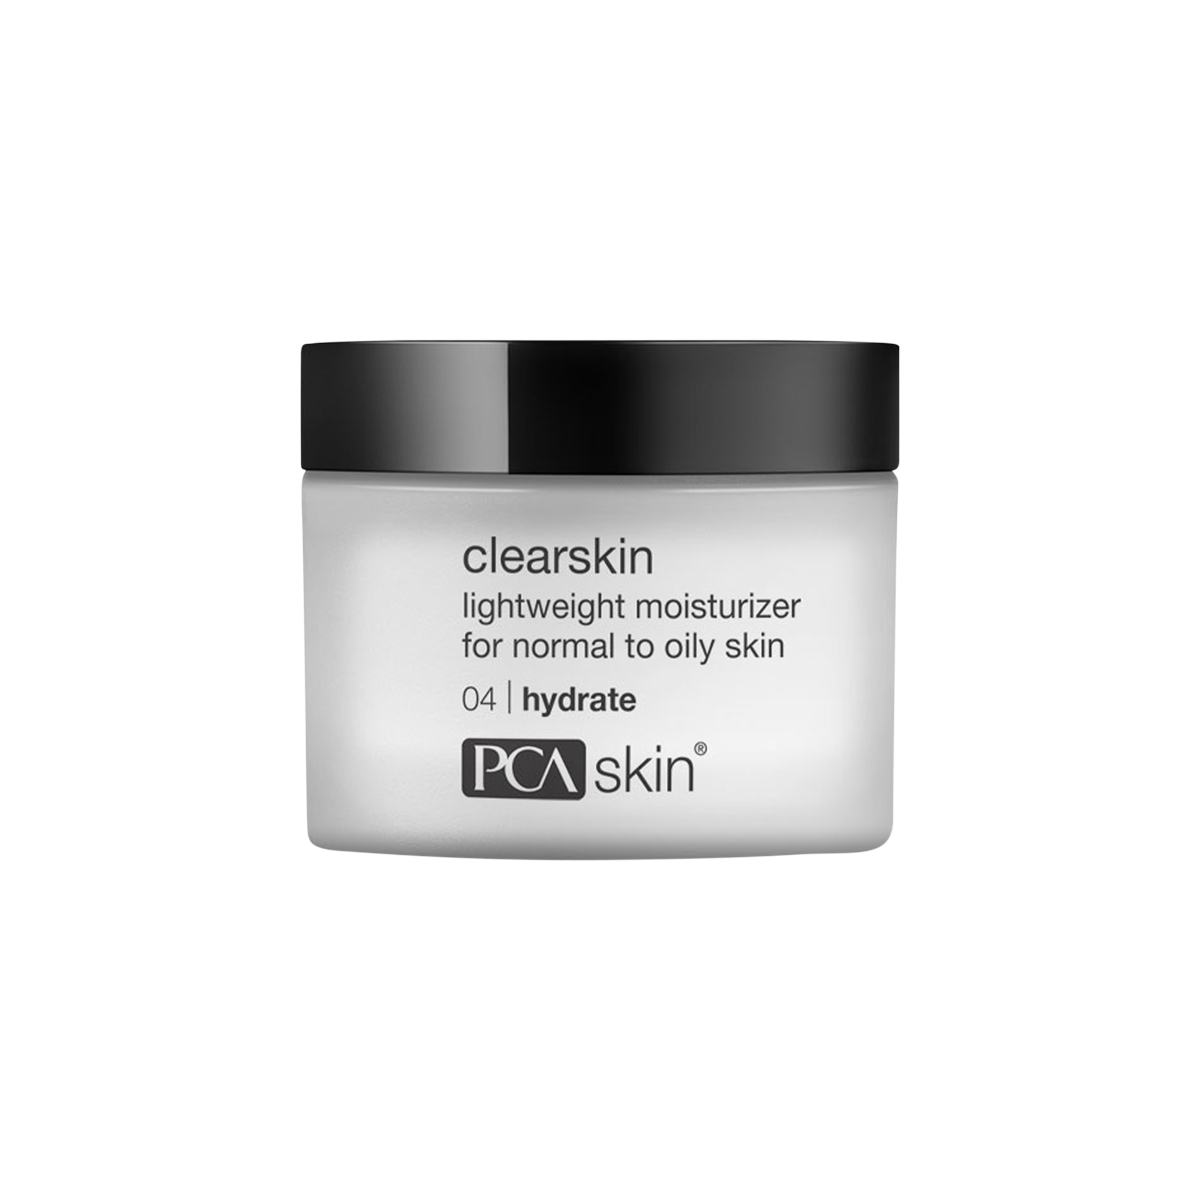 PCA Skin - Clearskin lightweight moisturizer